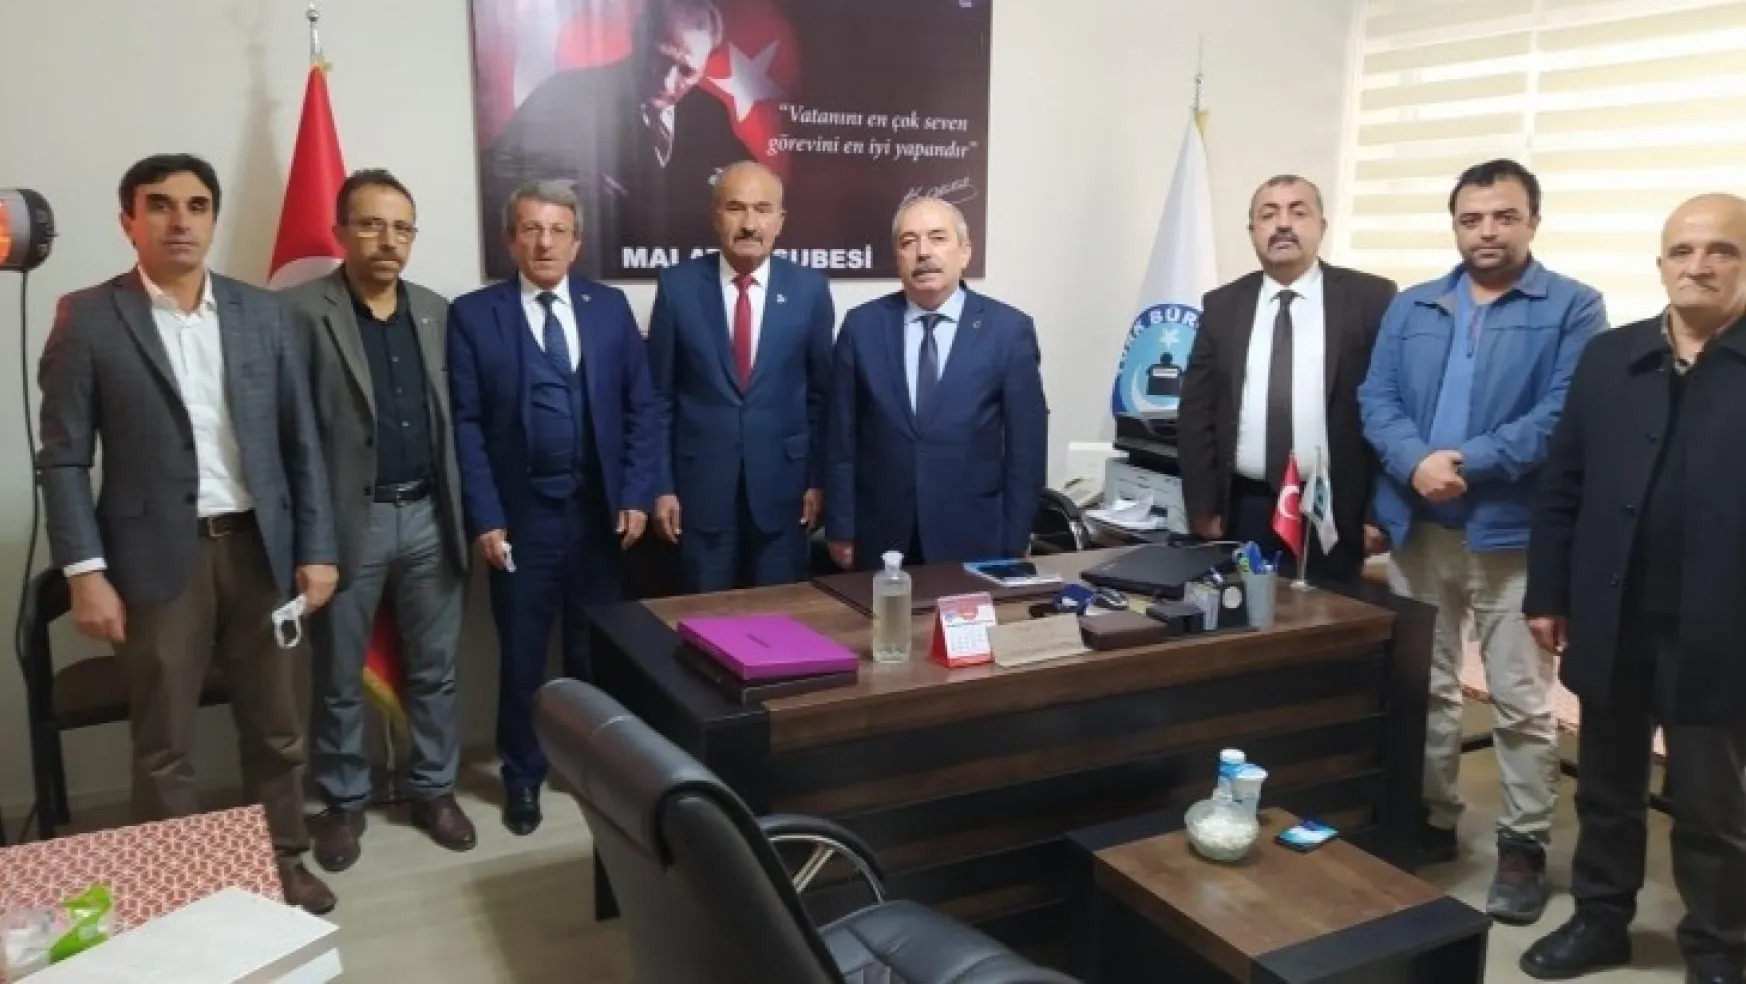 Başkan Kaya'dan Türk Büro Sen'e ziyaret